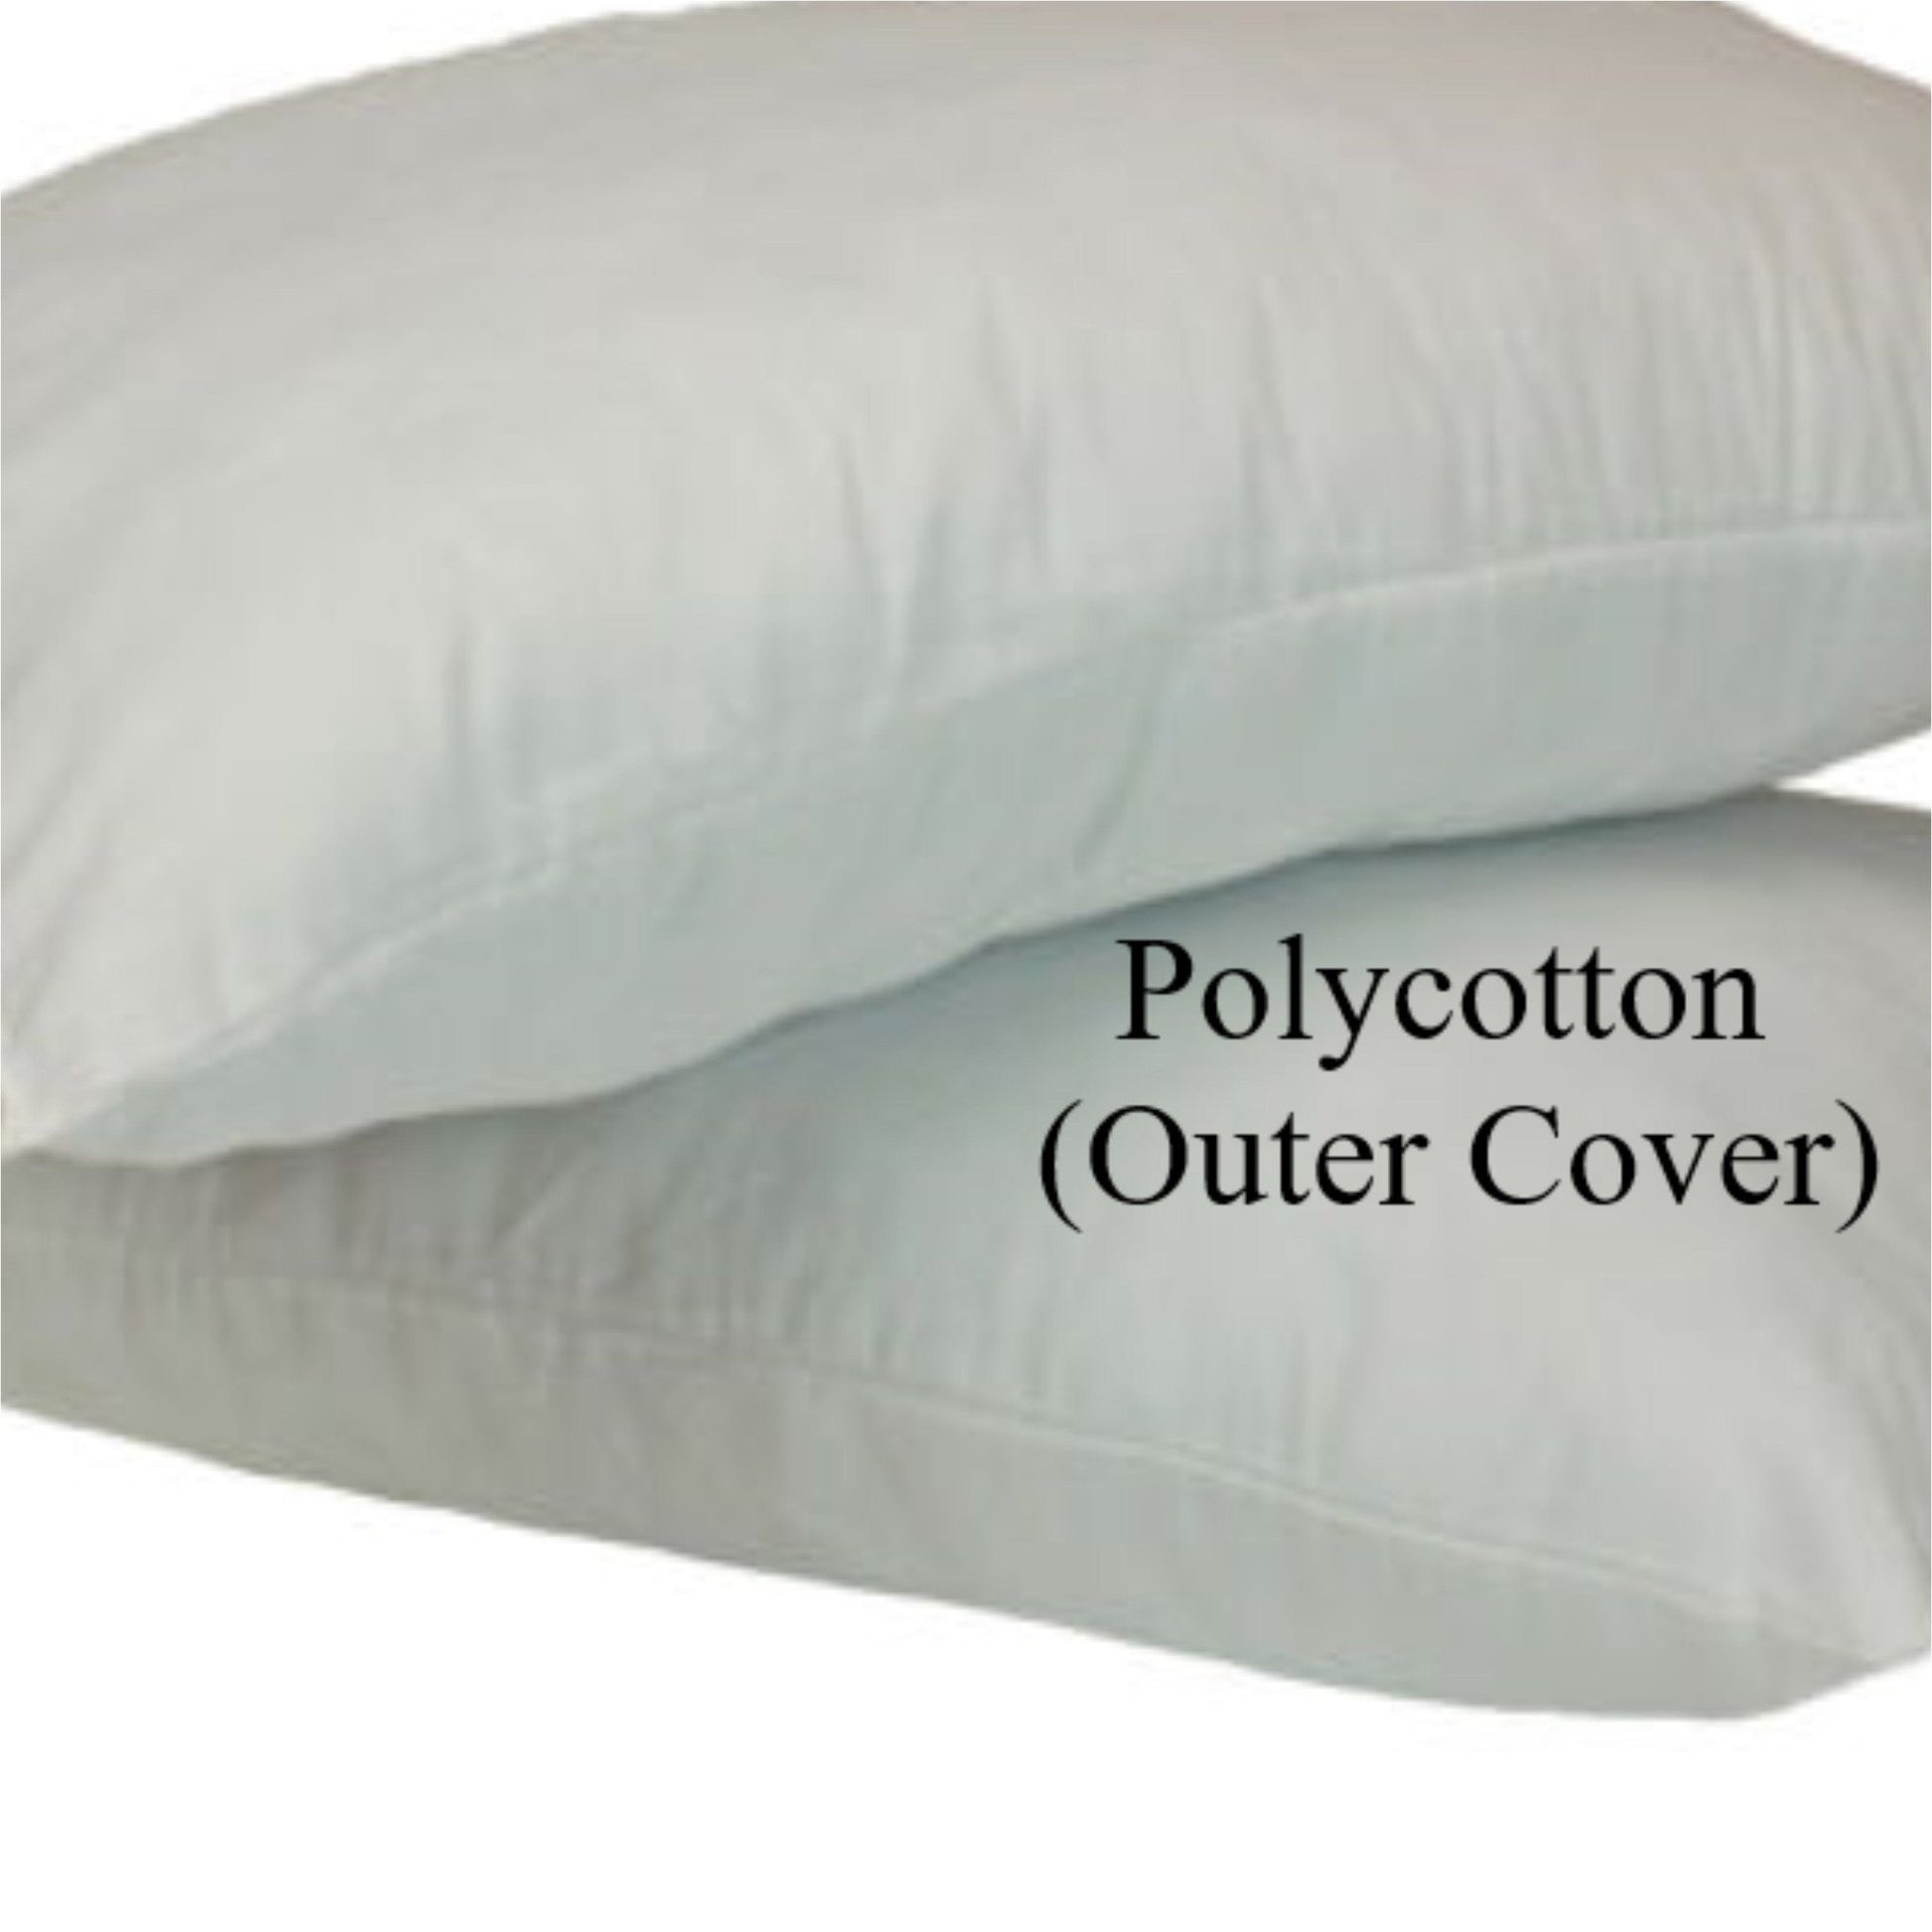 ARLINENS Hollow Fibre Pillows Hotel Quailty Plump Extra Filled Bounce Back Pillows - Arlinens